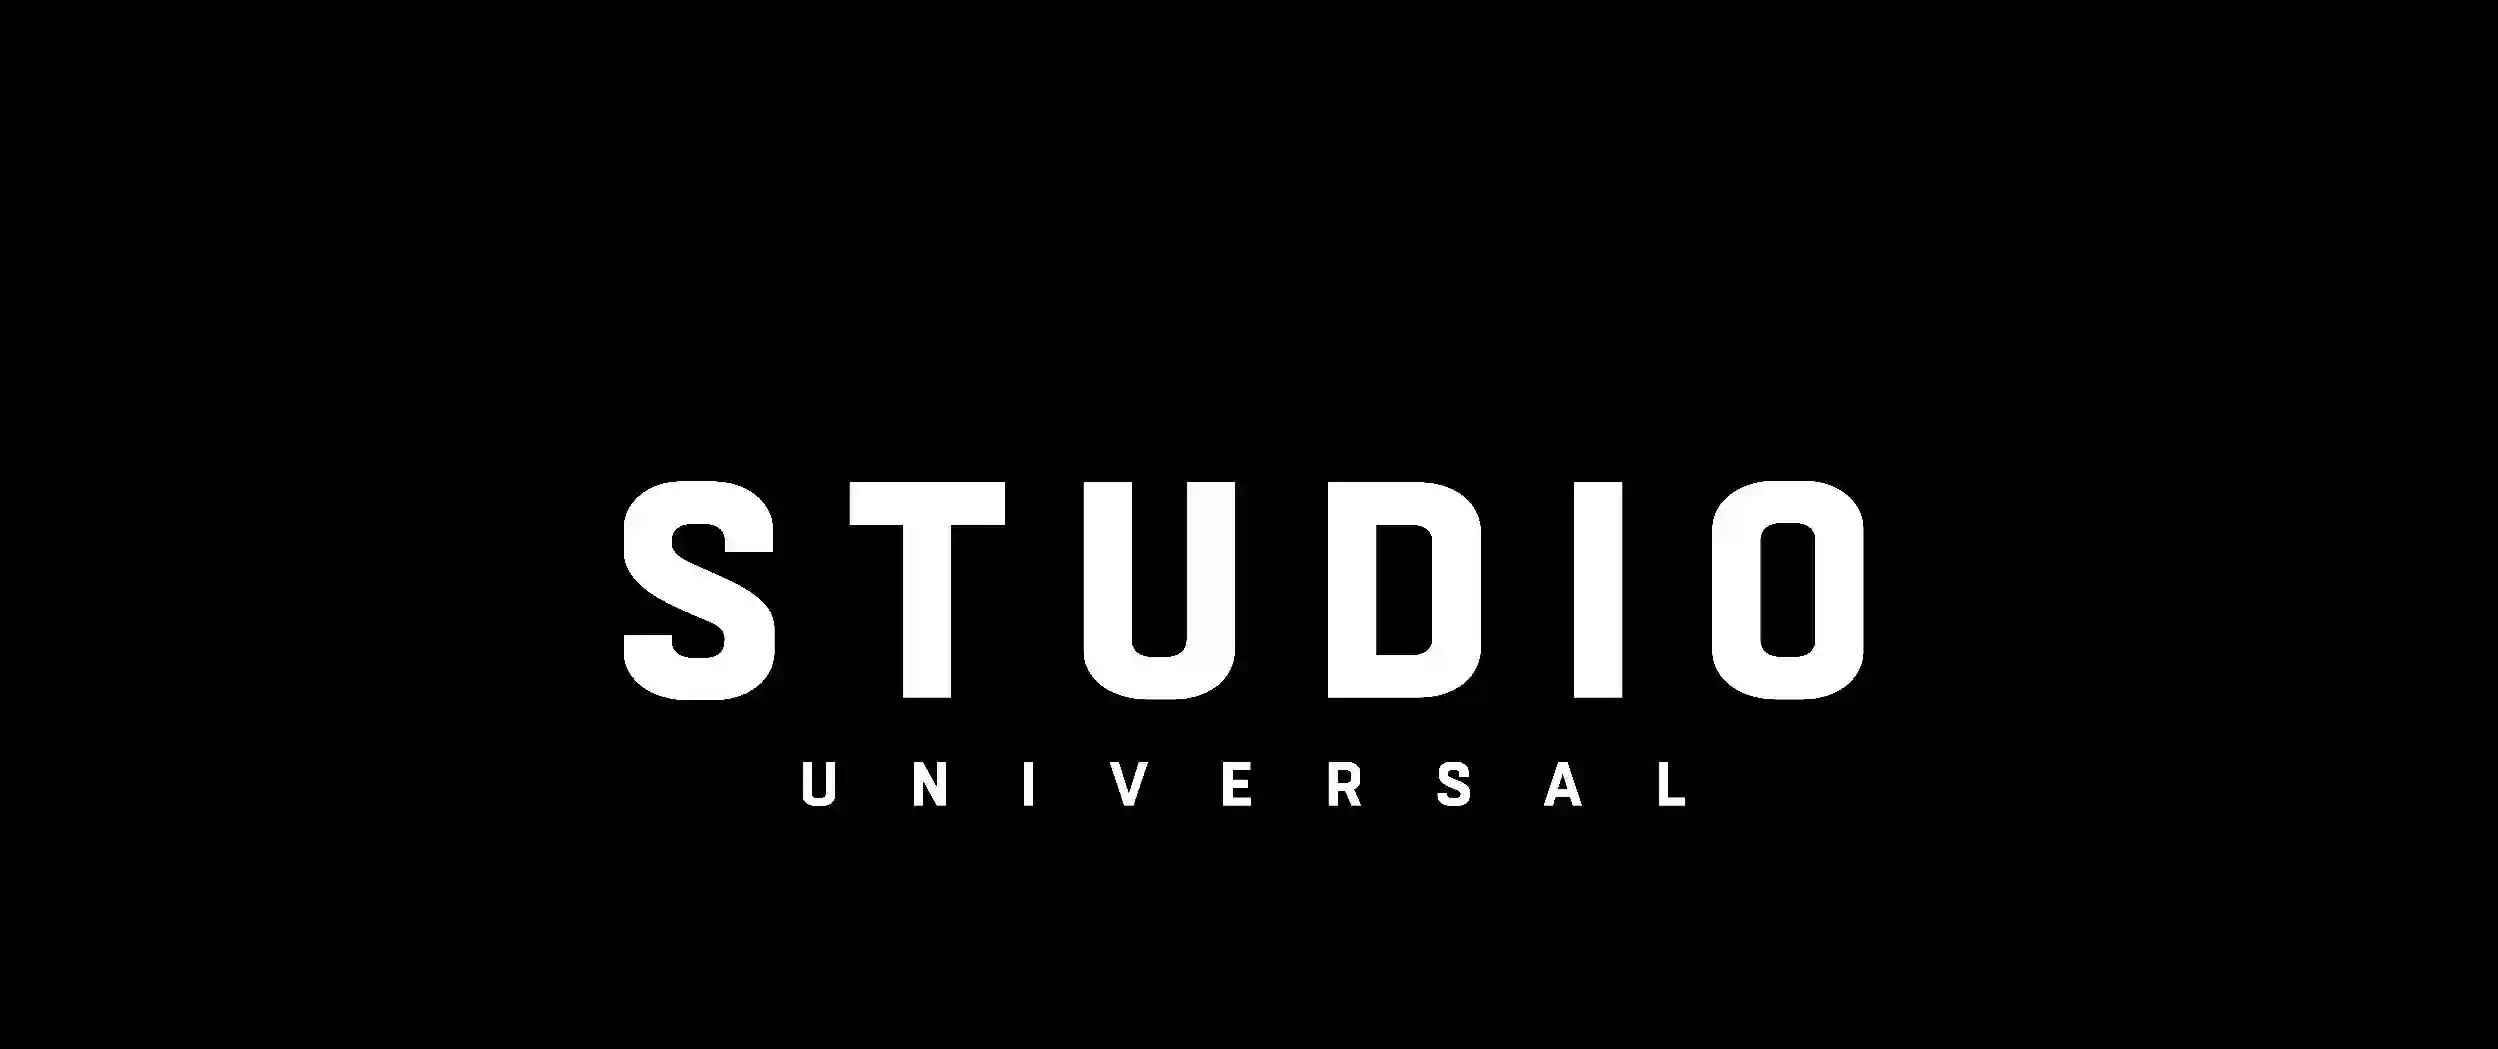 Programação Studio Universal